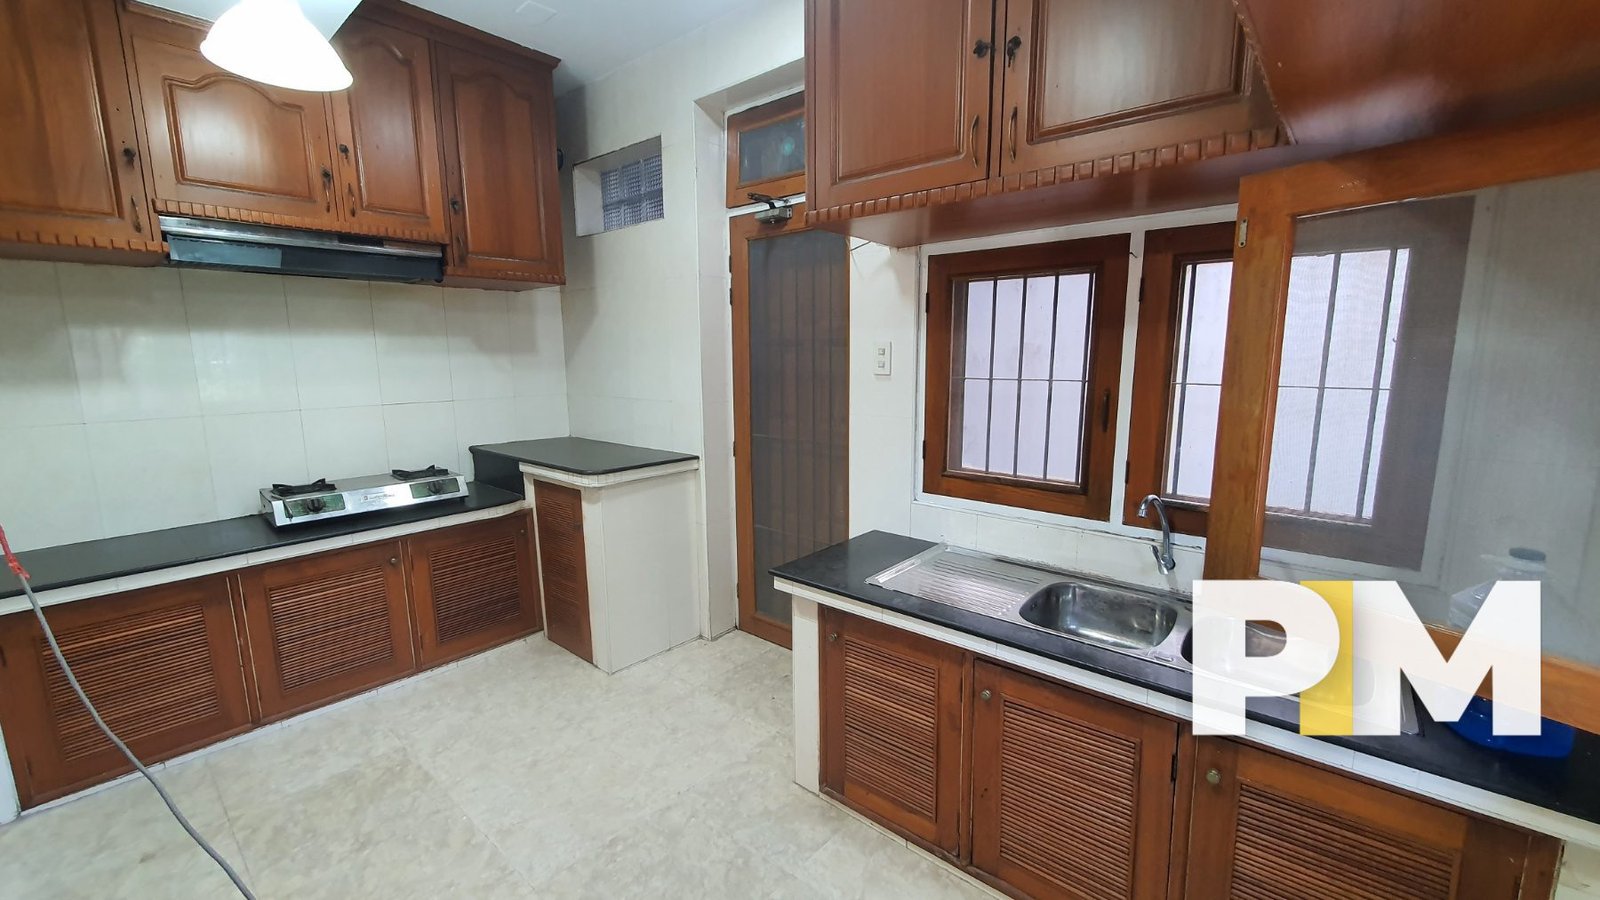 Kitchen Room wiht sink - Real Estate in Myanmar